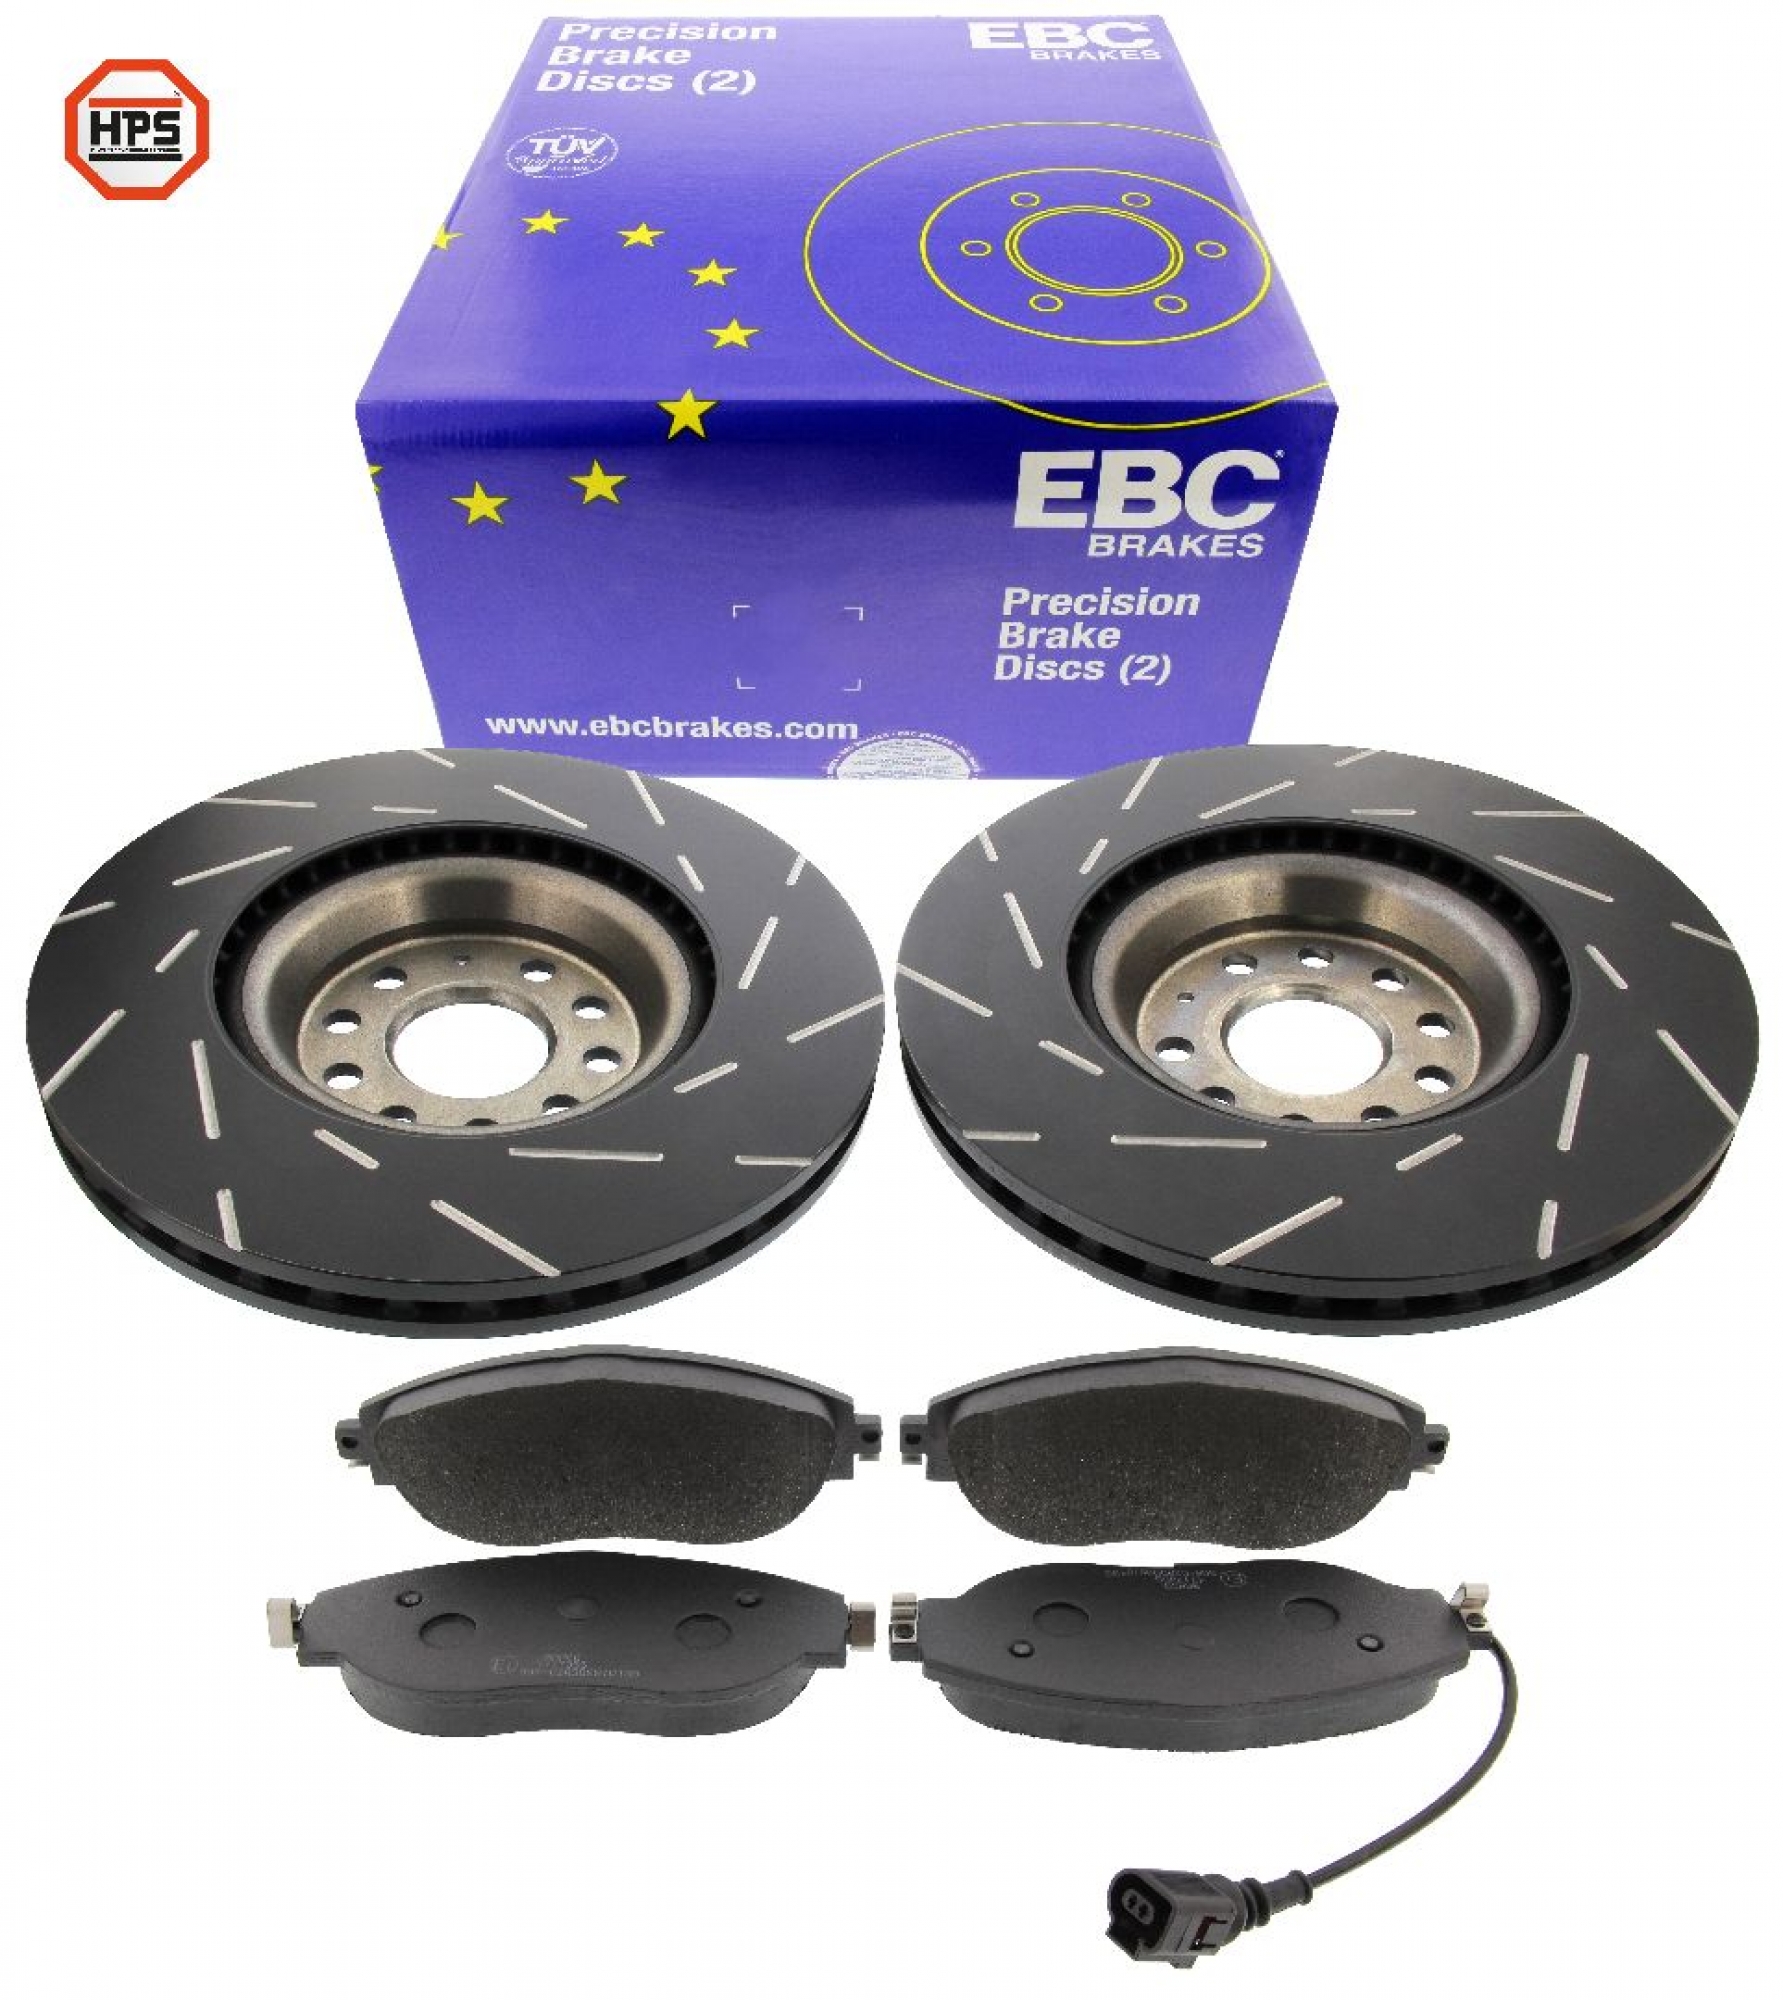 EBC-Bremsensatz, Black Dash Disc + HPS-Carbon-Bremsbelägen von MAPCO, Achssatz, VA, Audi, Seat, Skoda, VW